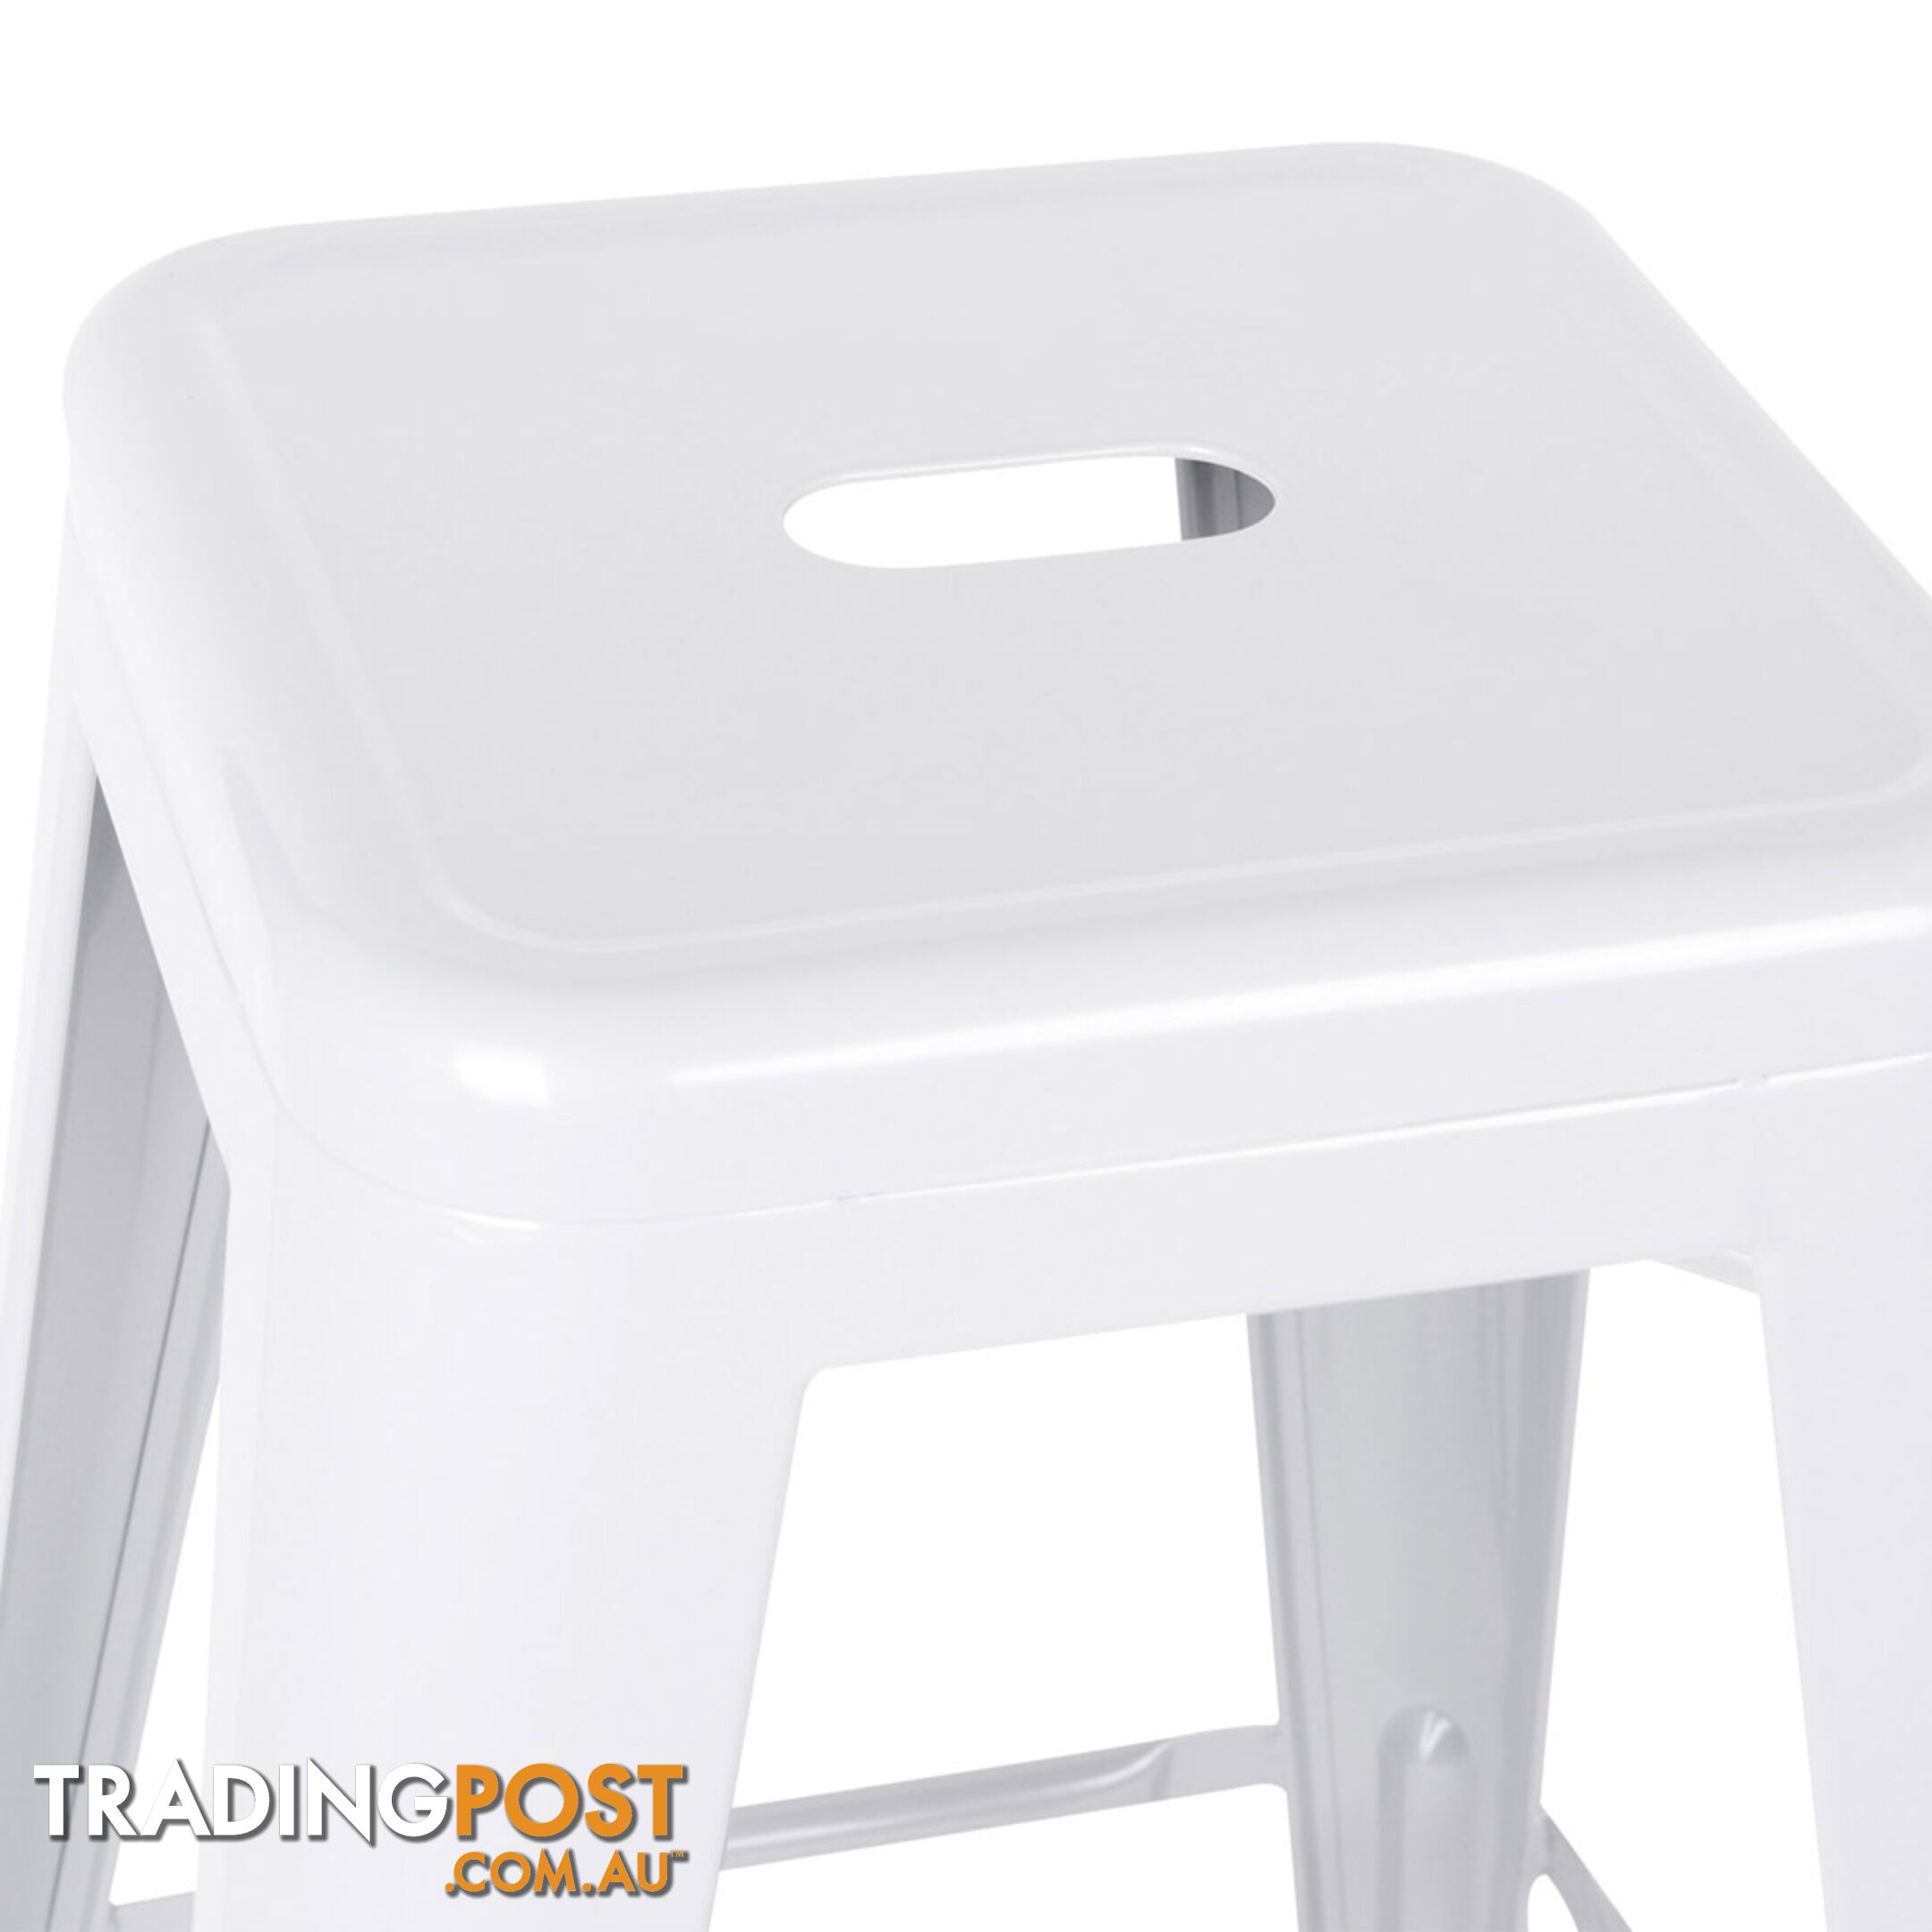 2 x Metal Steel Bar Stool Replica Xavier Cafe Home Kitchen Bar Chair 76cm White